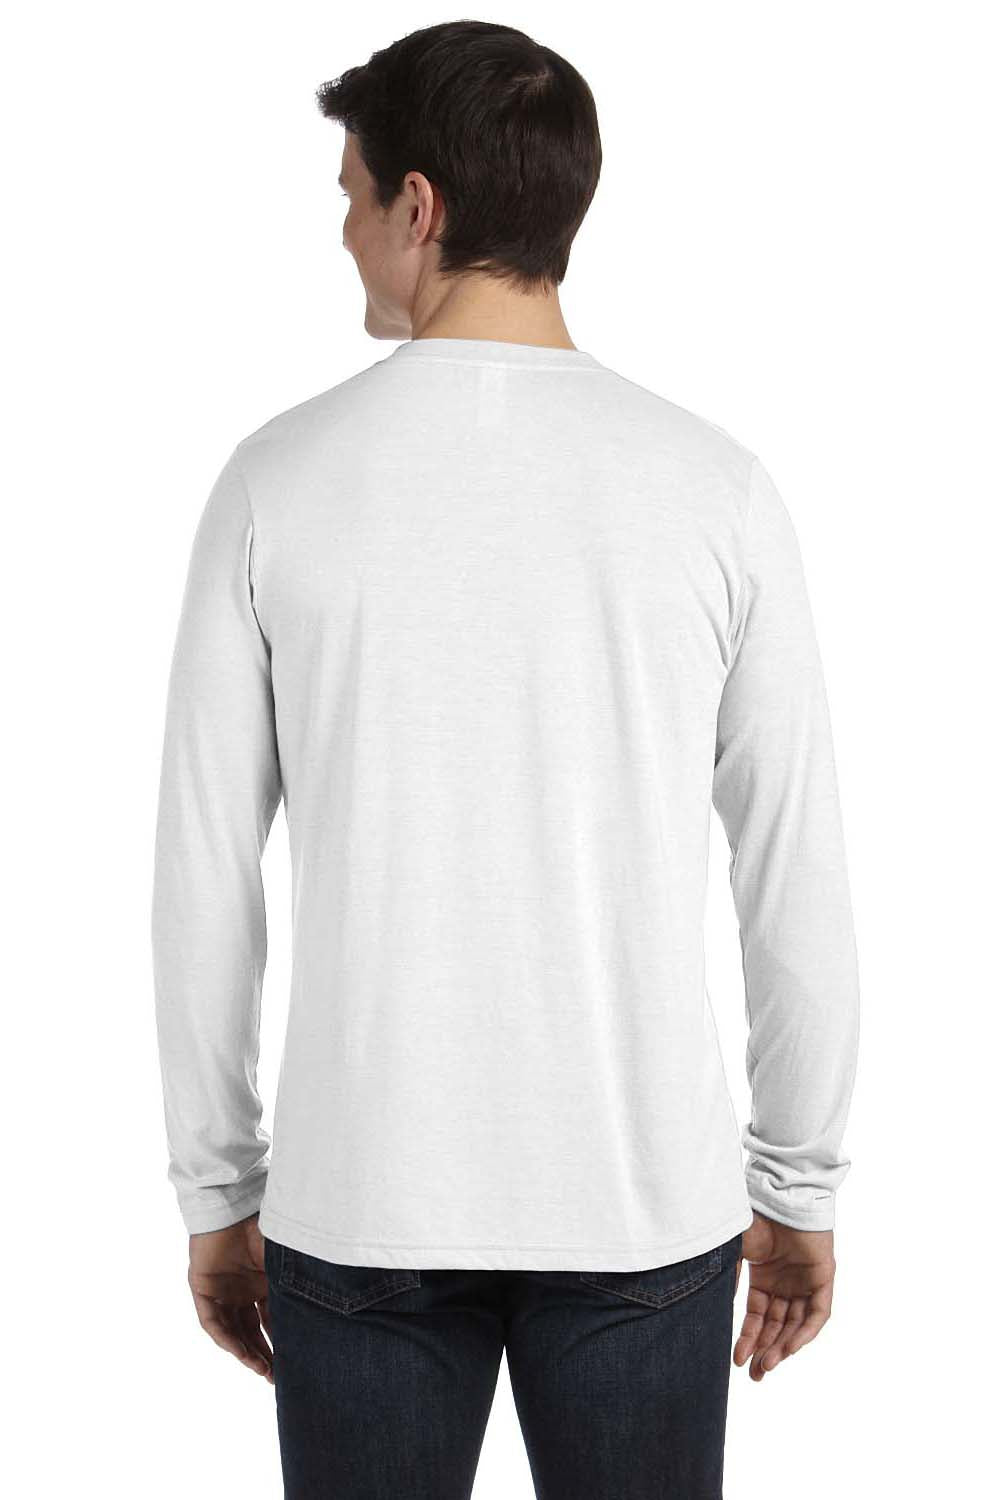 Bella + Canvas 3425 Mens Jersey Long Sleeve V-Neck T-Shirt White Back